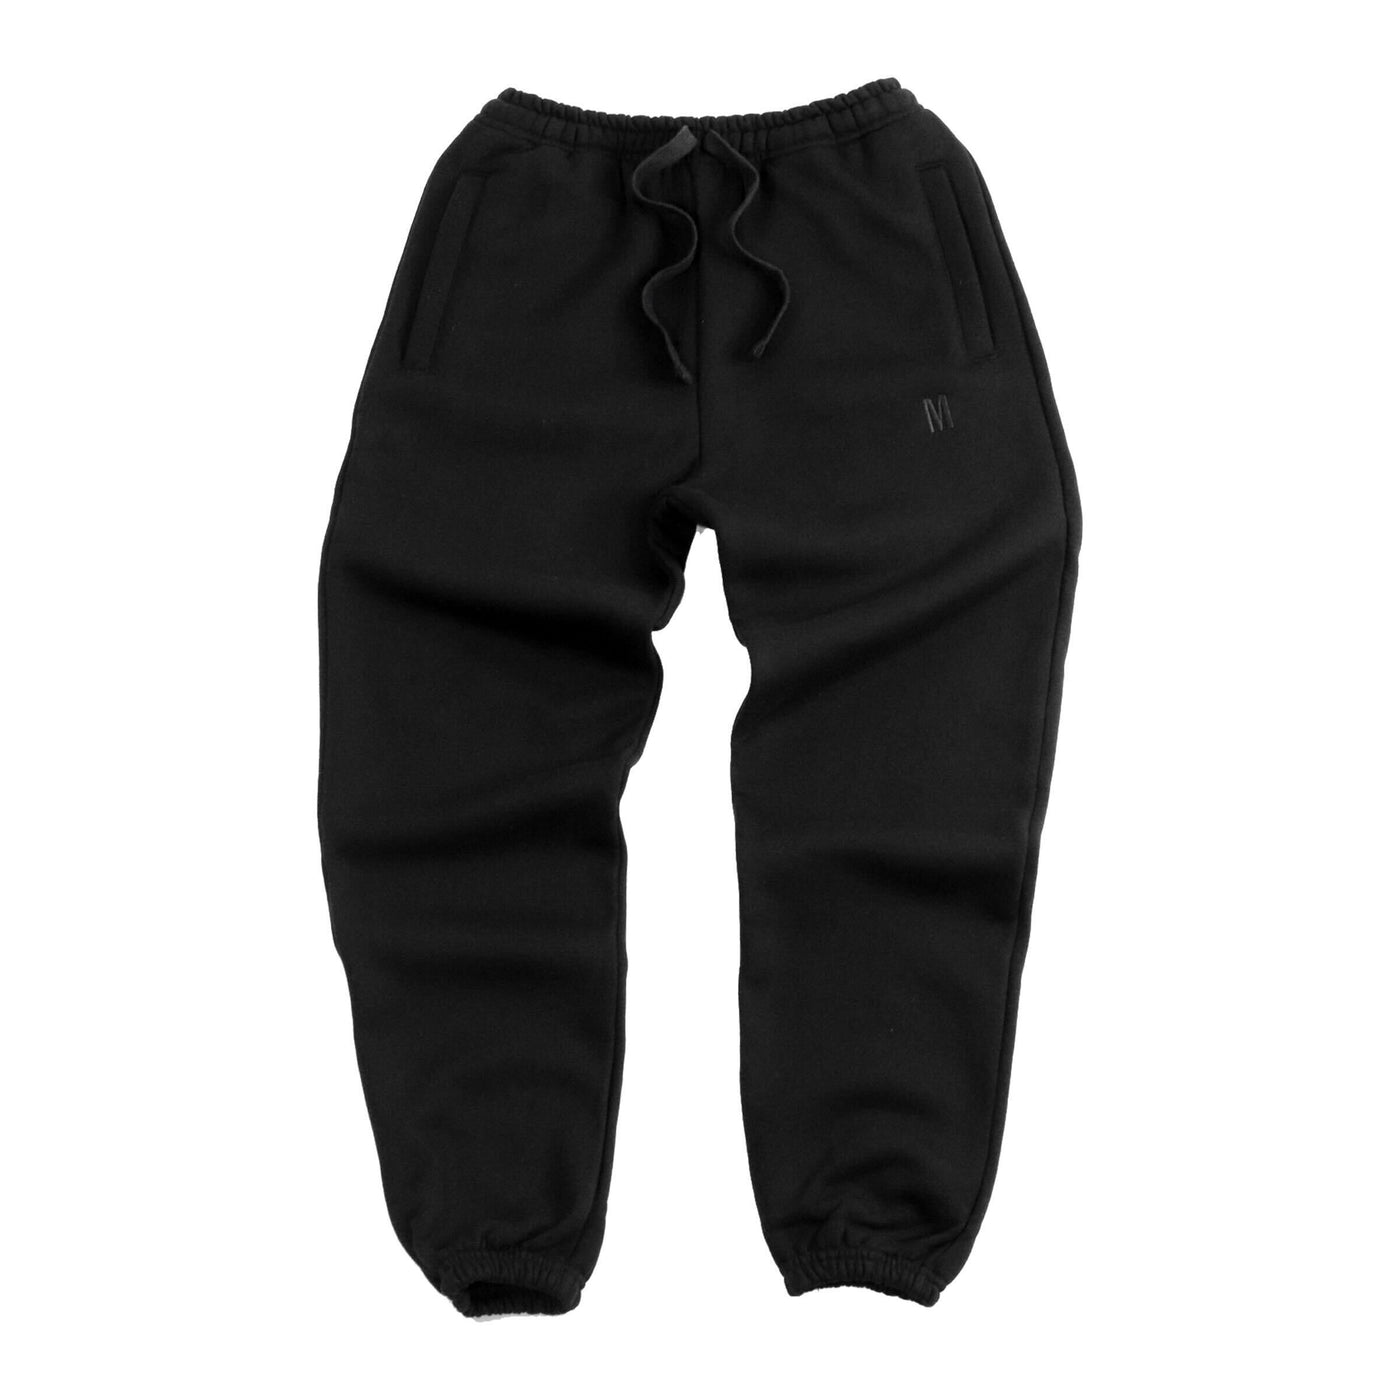 Limited Edition (Ultra) Marathon Pants - Black/Black